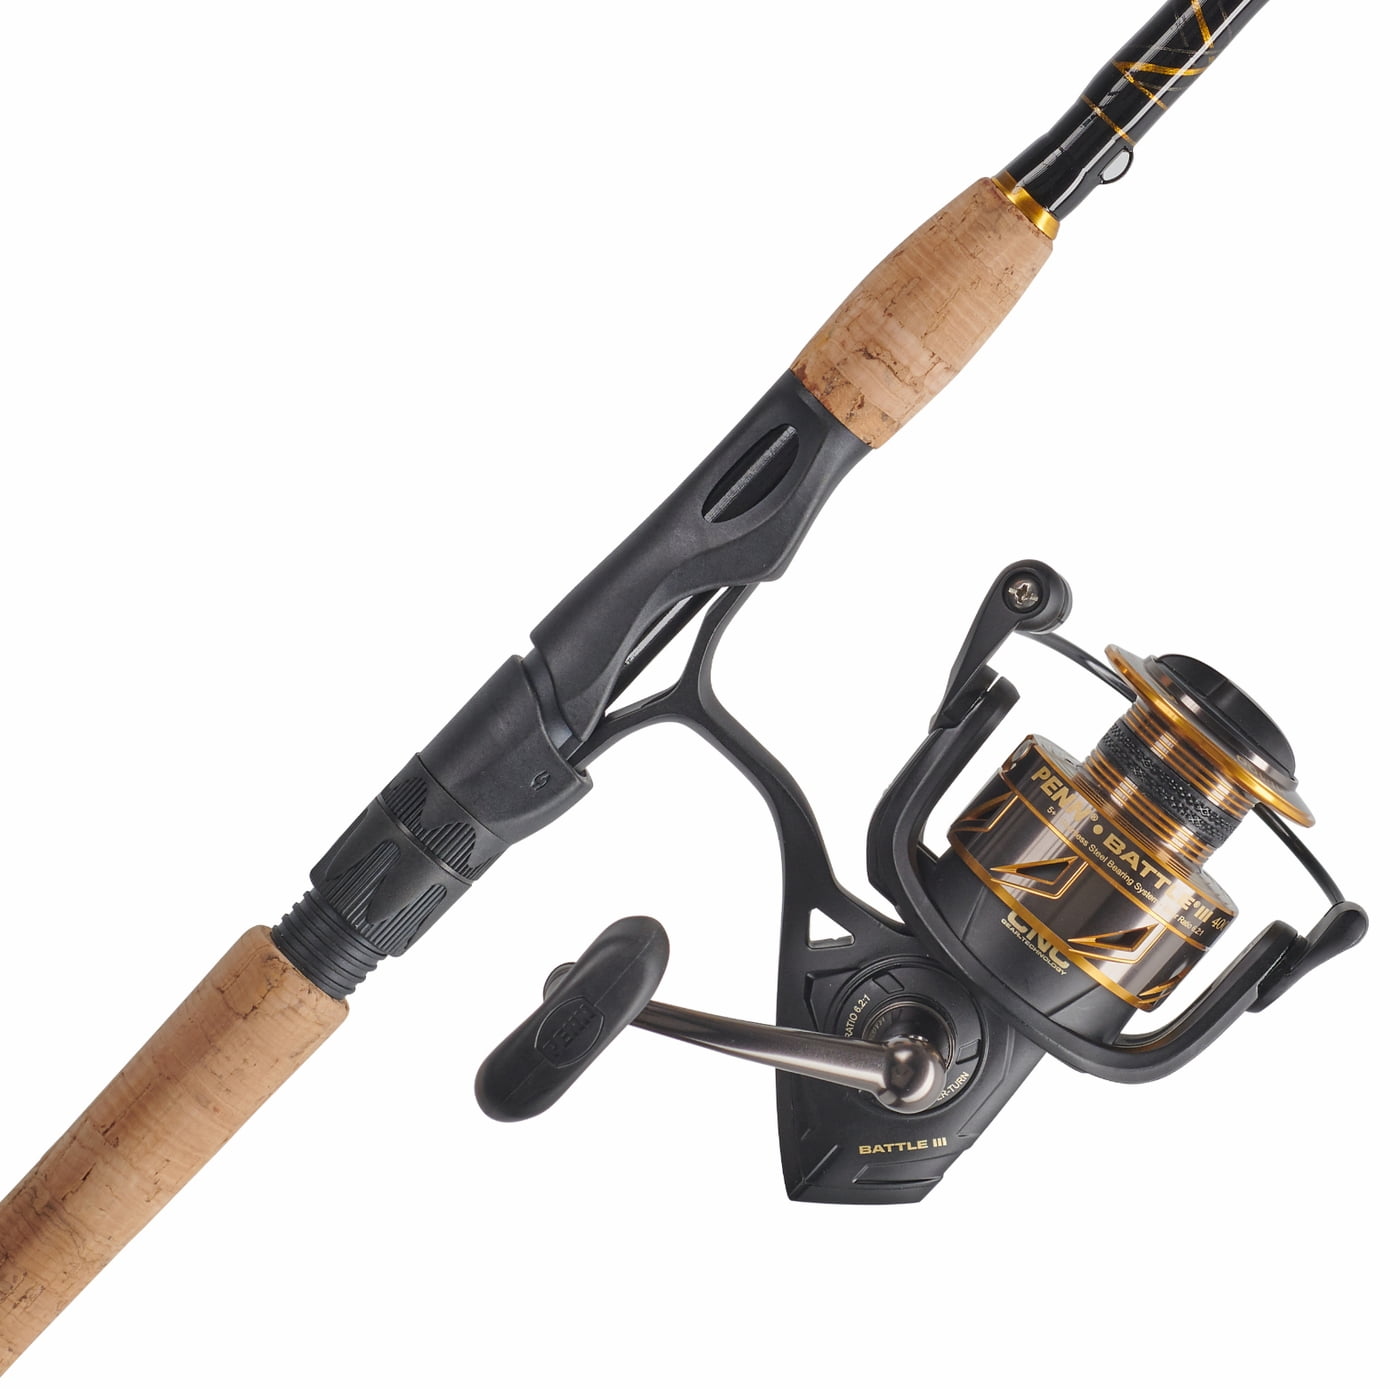 PENN 7' Battle III Fishing Rod and Reel Spinning Combo - Walmart